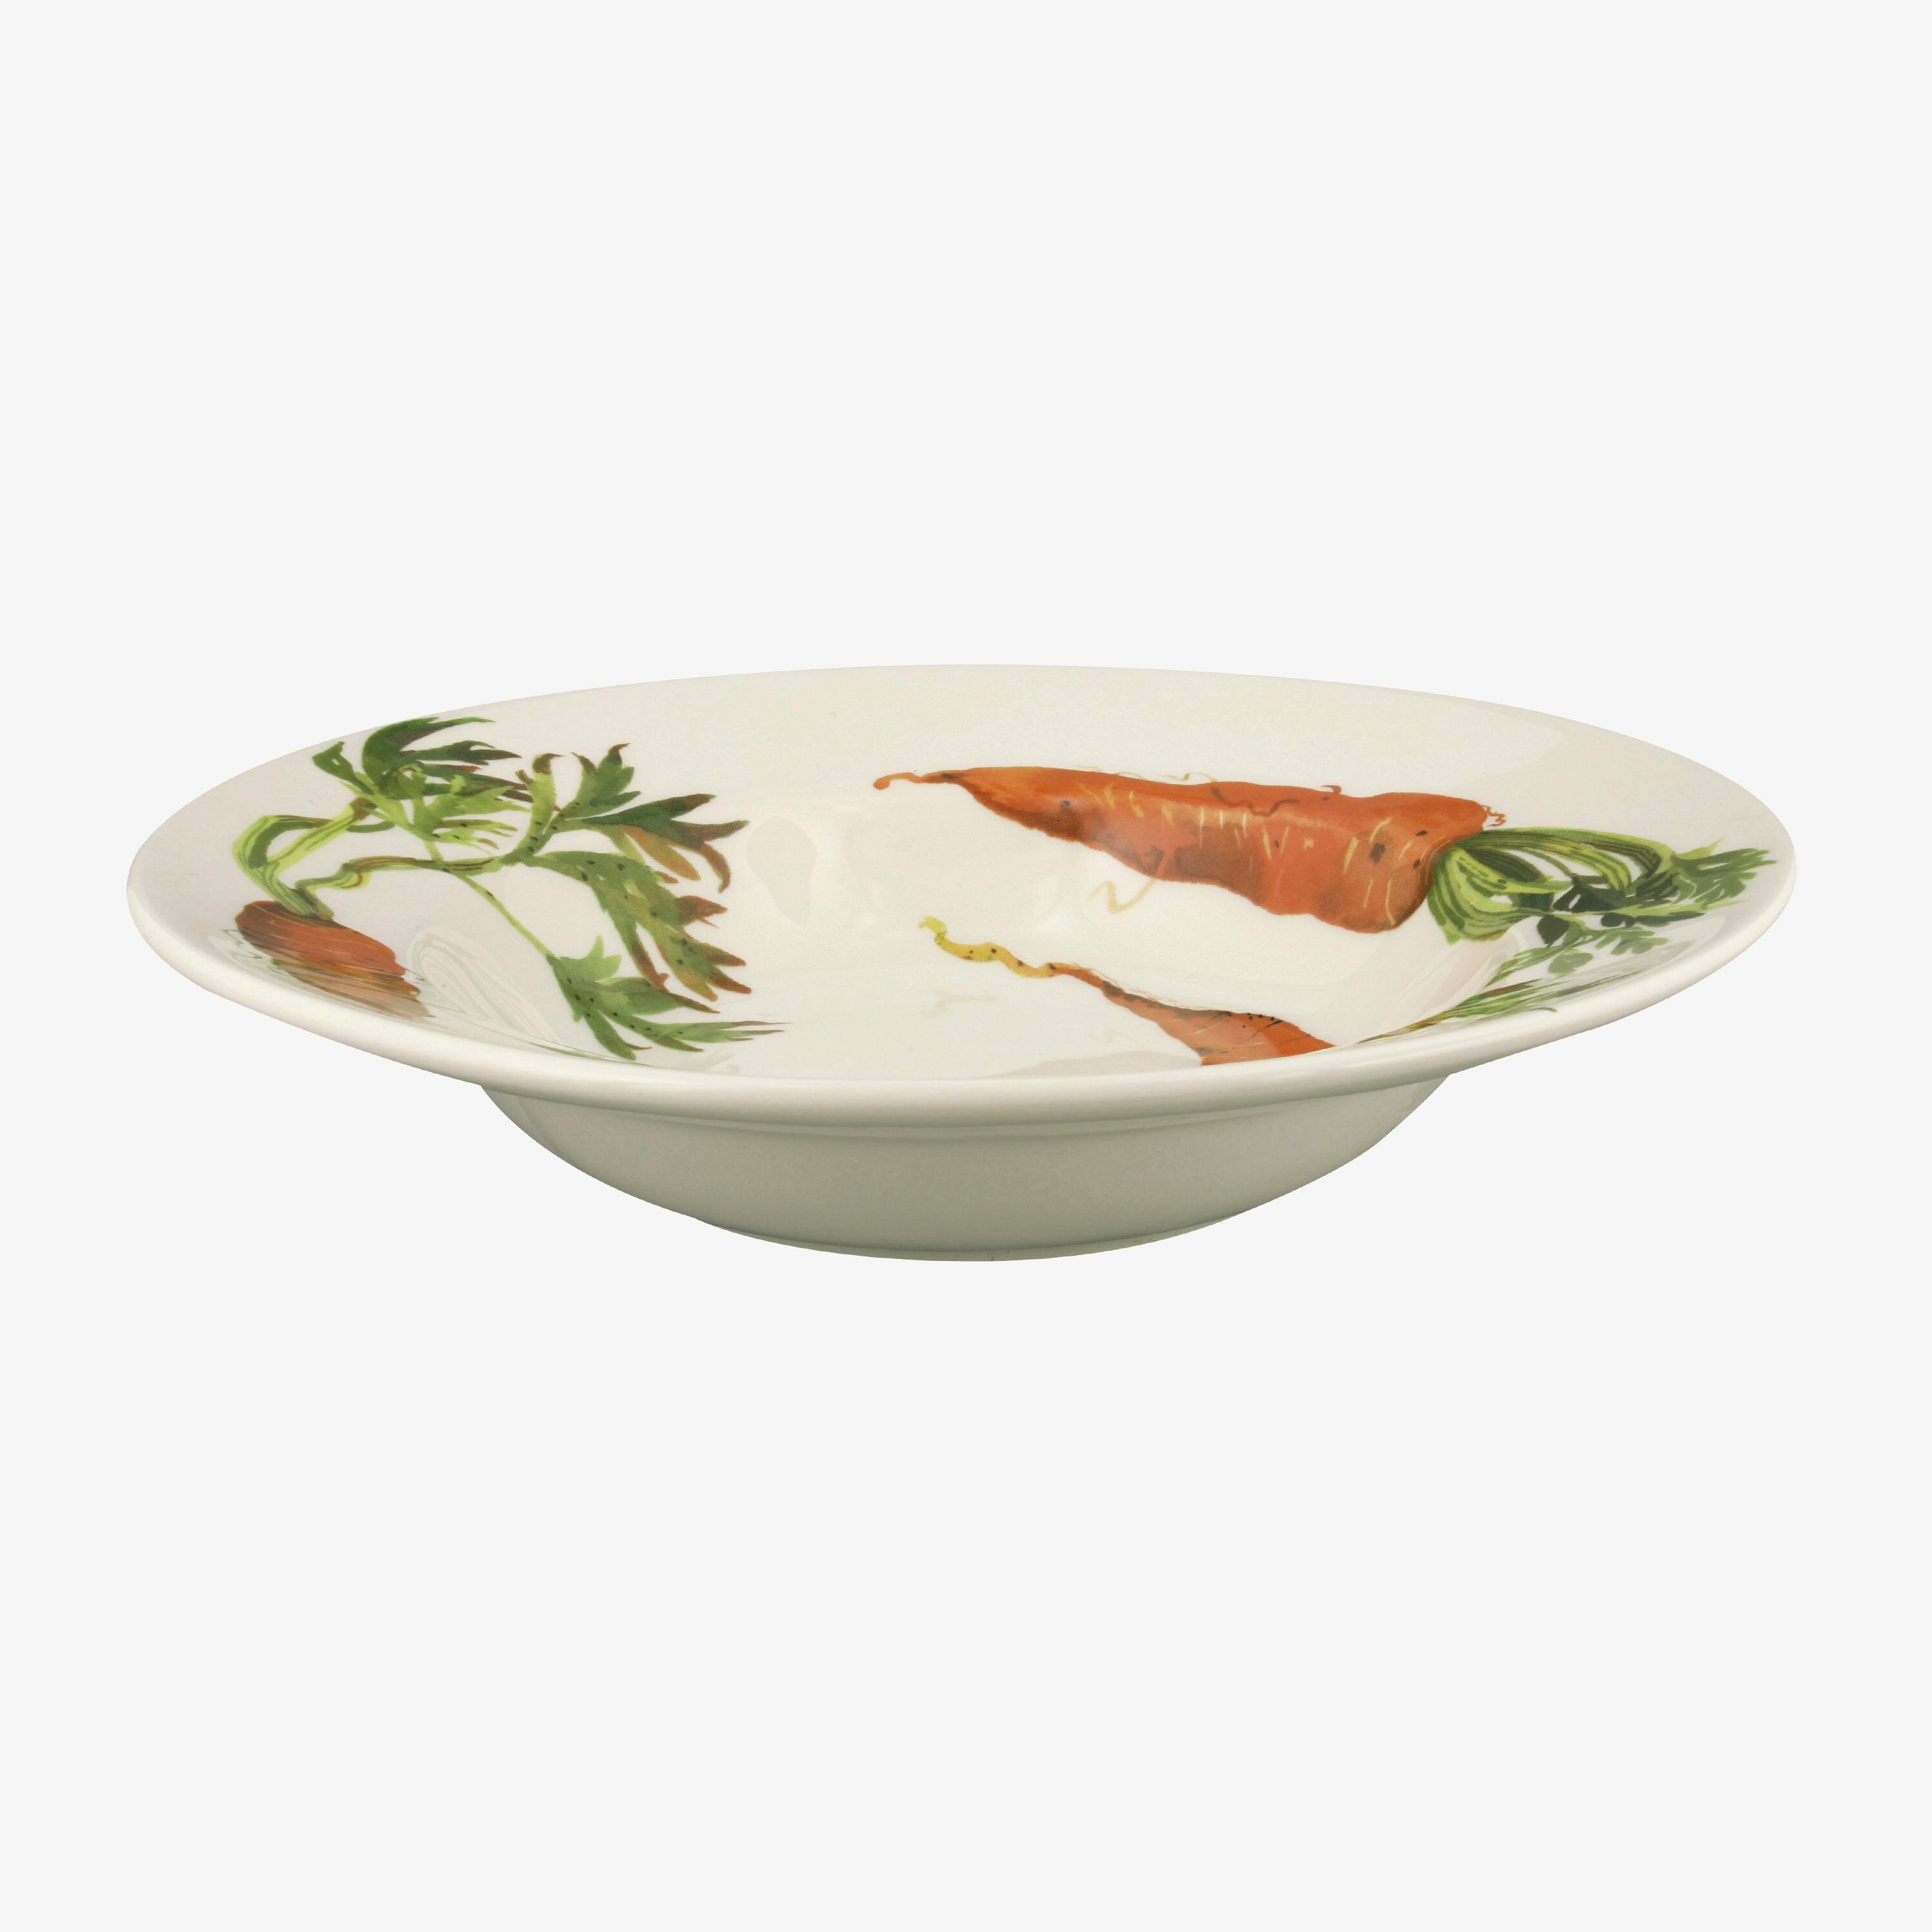 Carrots Soup Plate - Unique Handmade & Handpainted English Earthenware British-Made Pottery Plates  | Emma Bridgewater